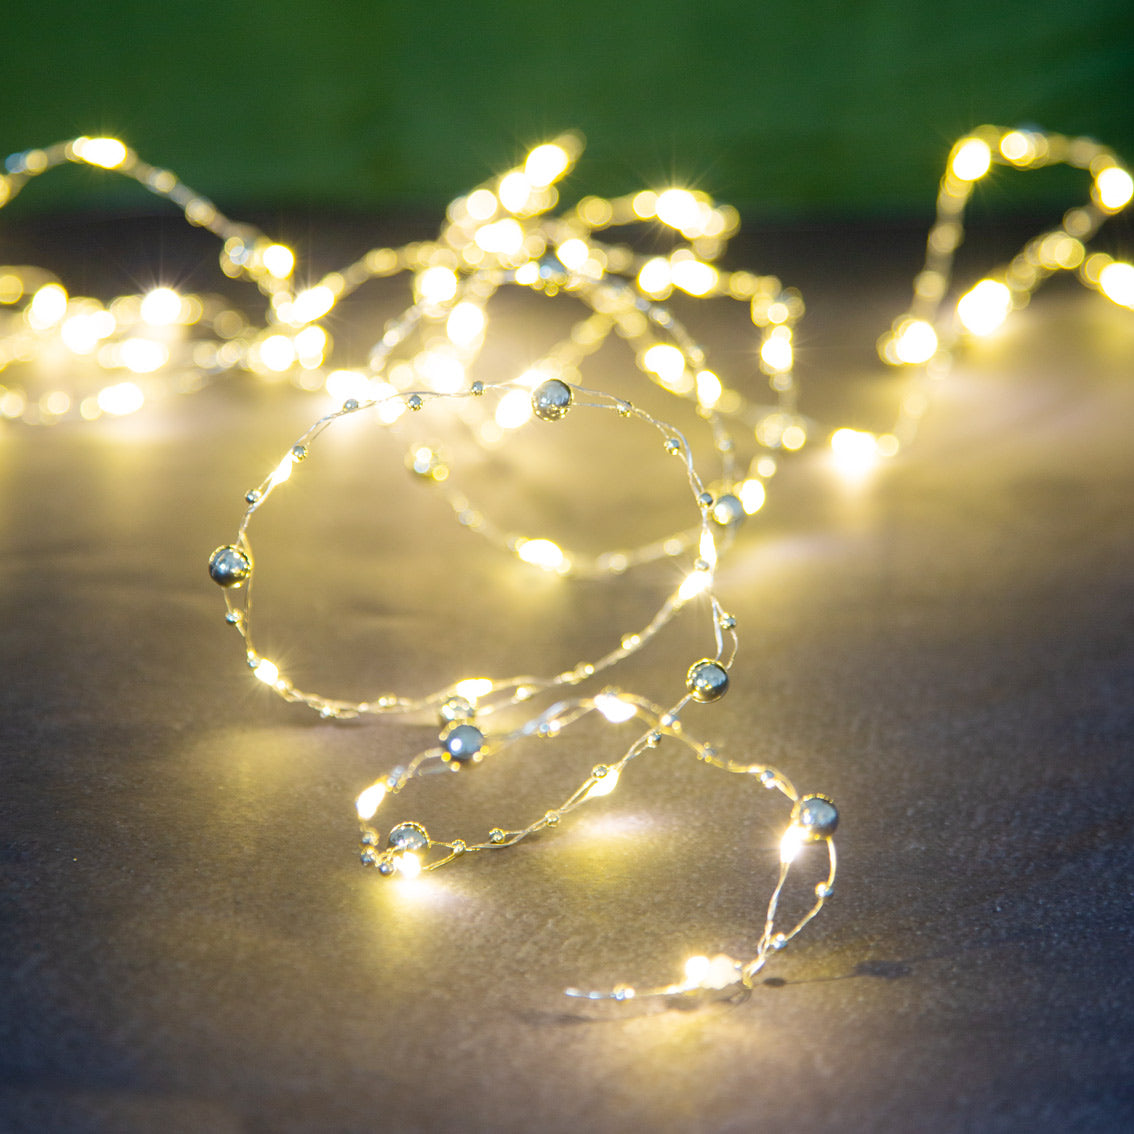 Christmas Lights - Mistletoe Gold Bead LEDs